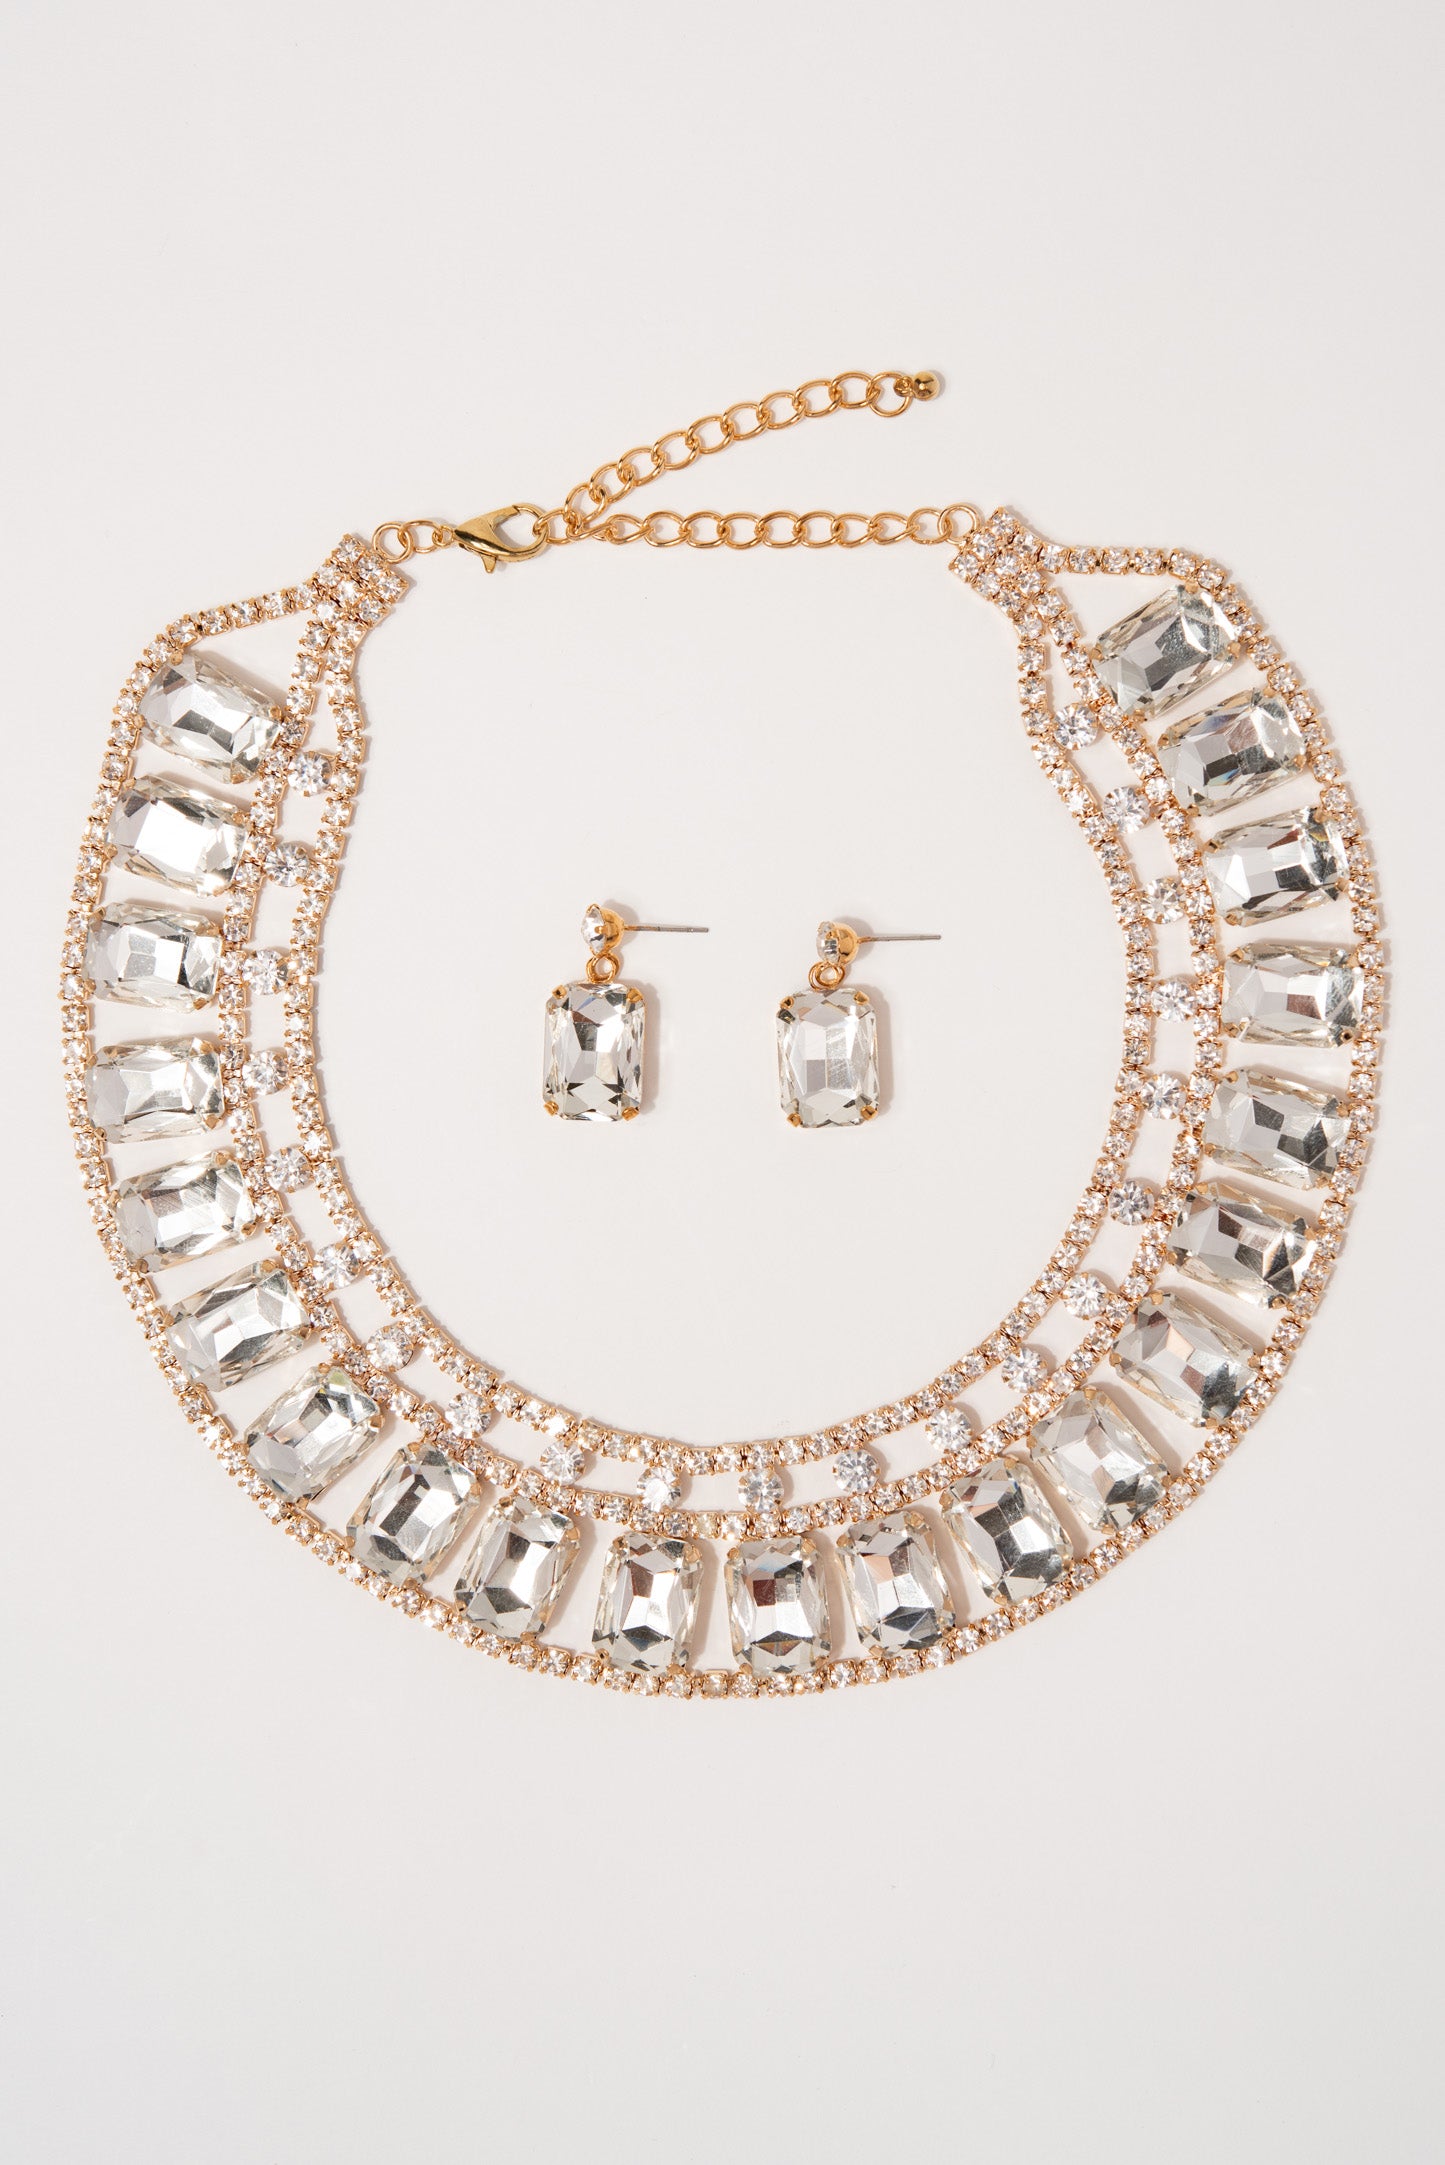 Grand Rhinestone Statement Necklace - Gold Crystals